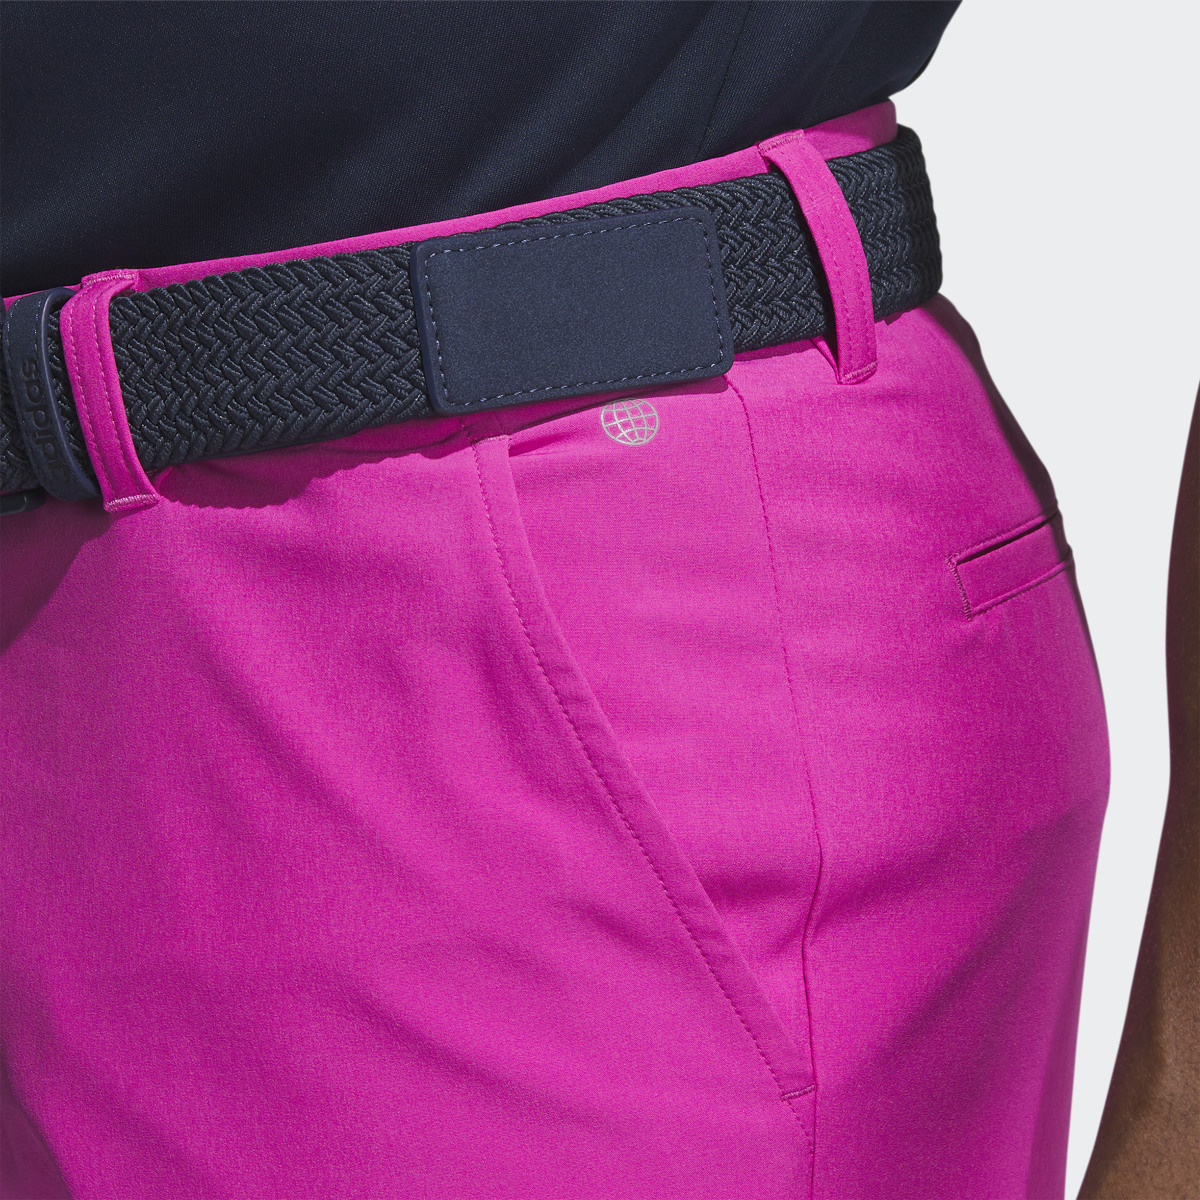 Adidas Ultimate365 8.5-Inch Golf Shorts. 6